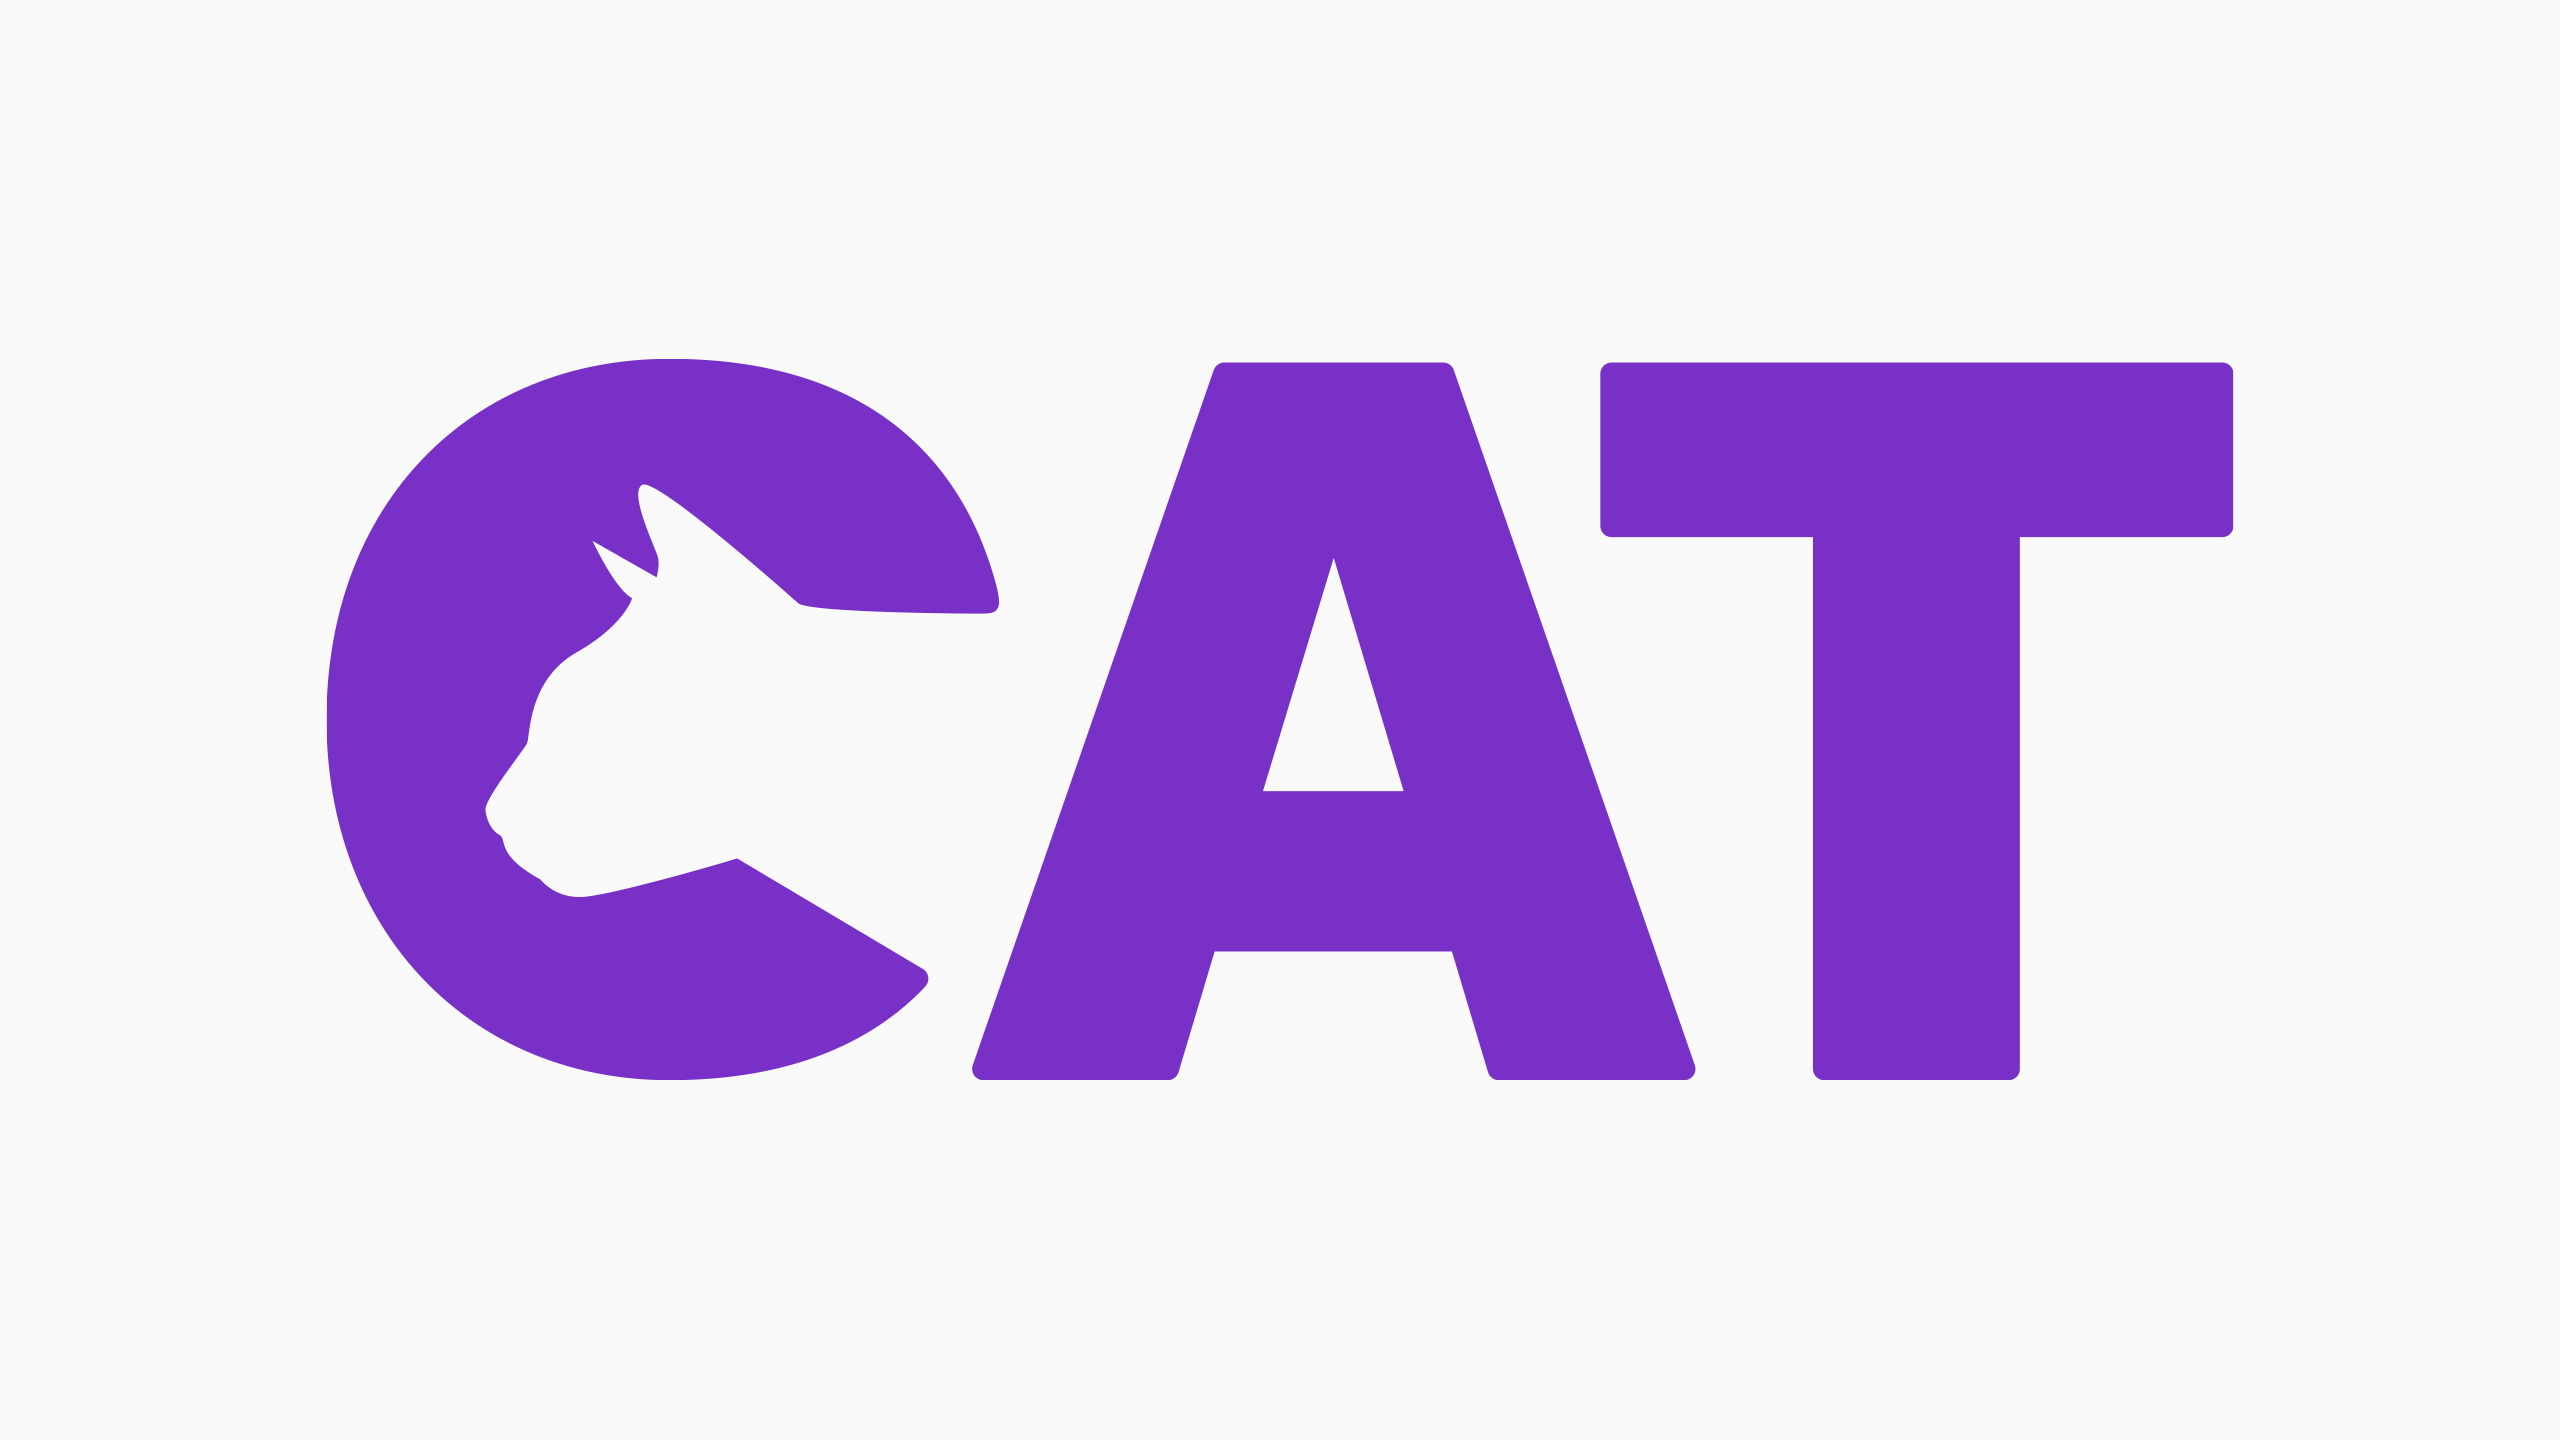 A purple CAT logo.